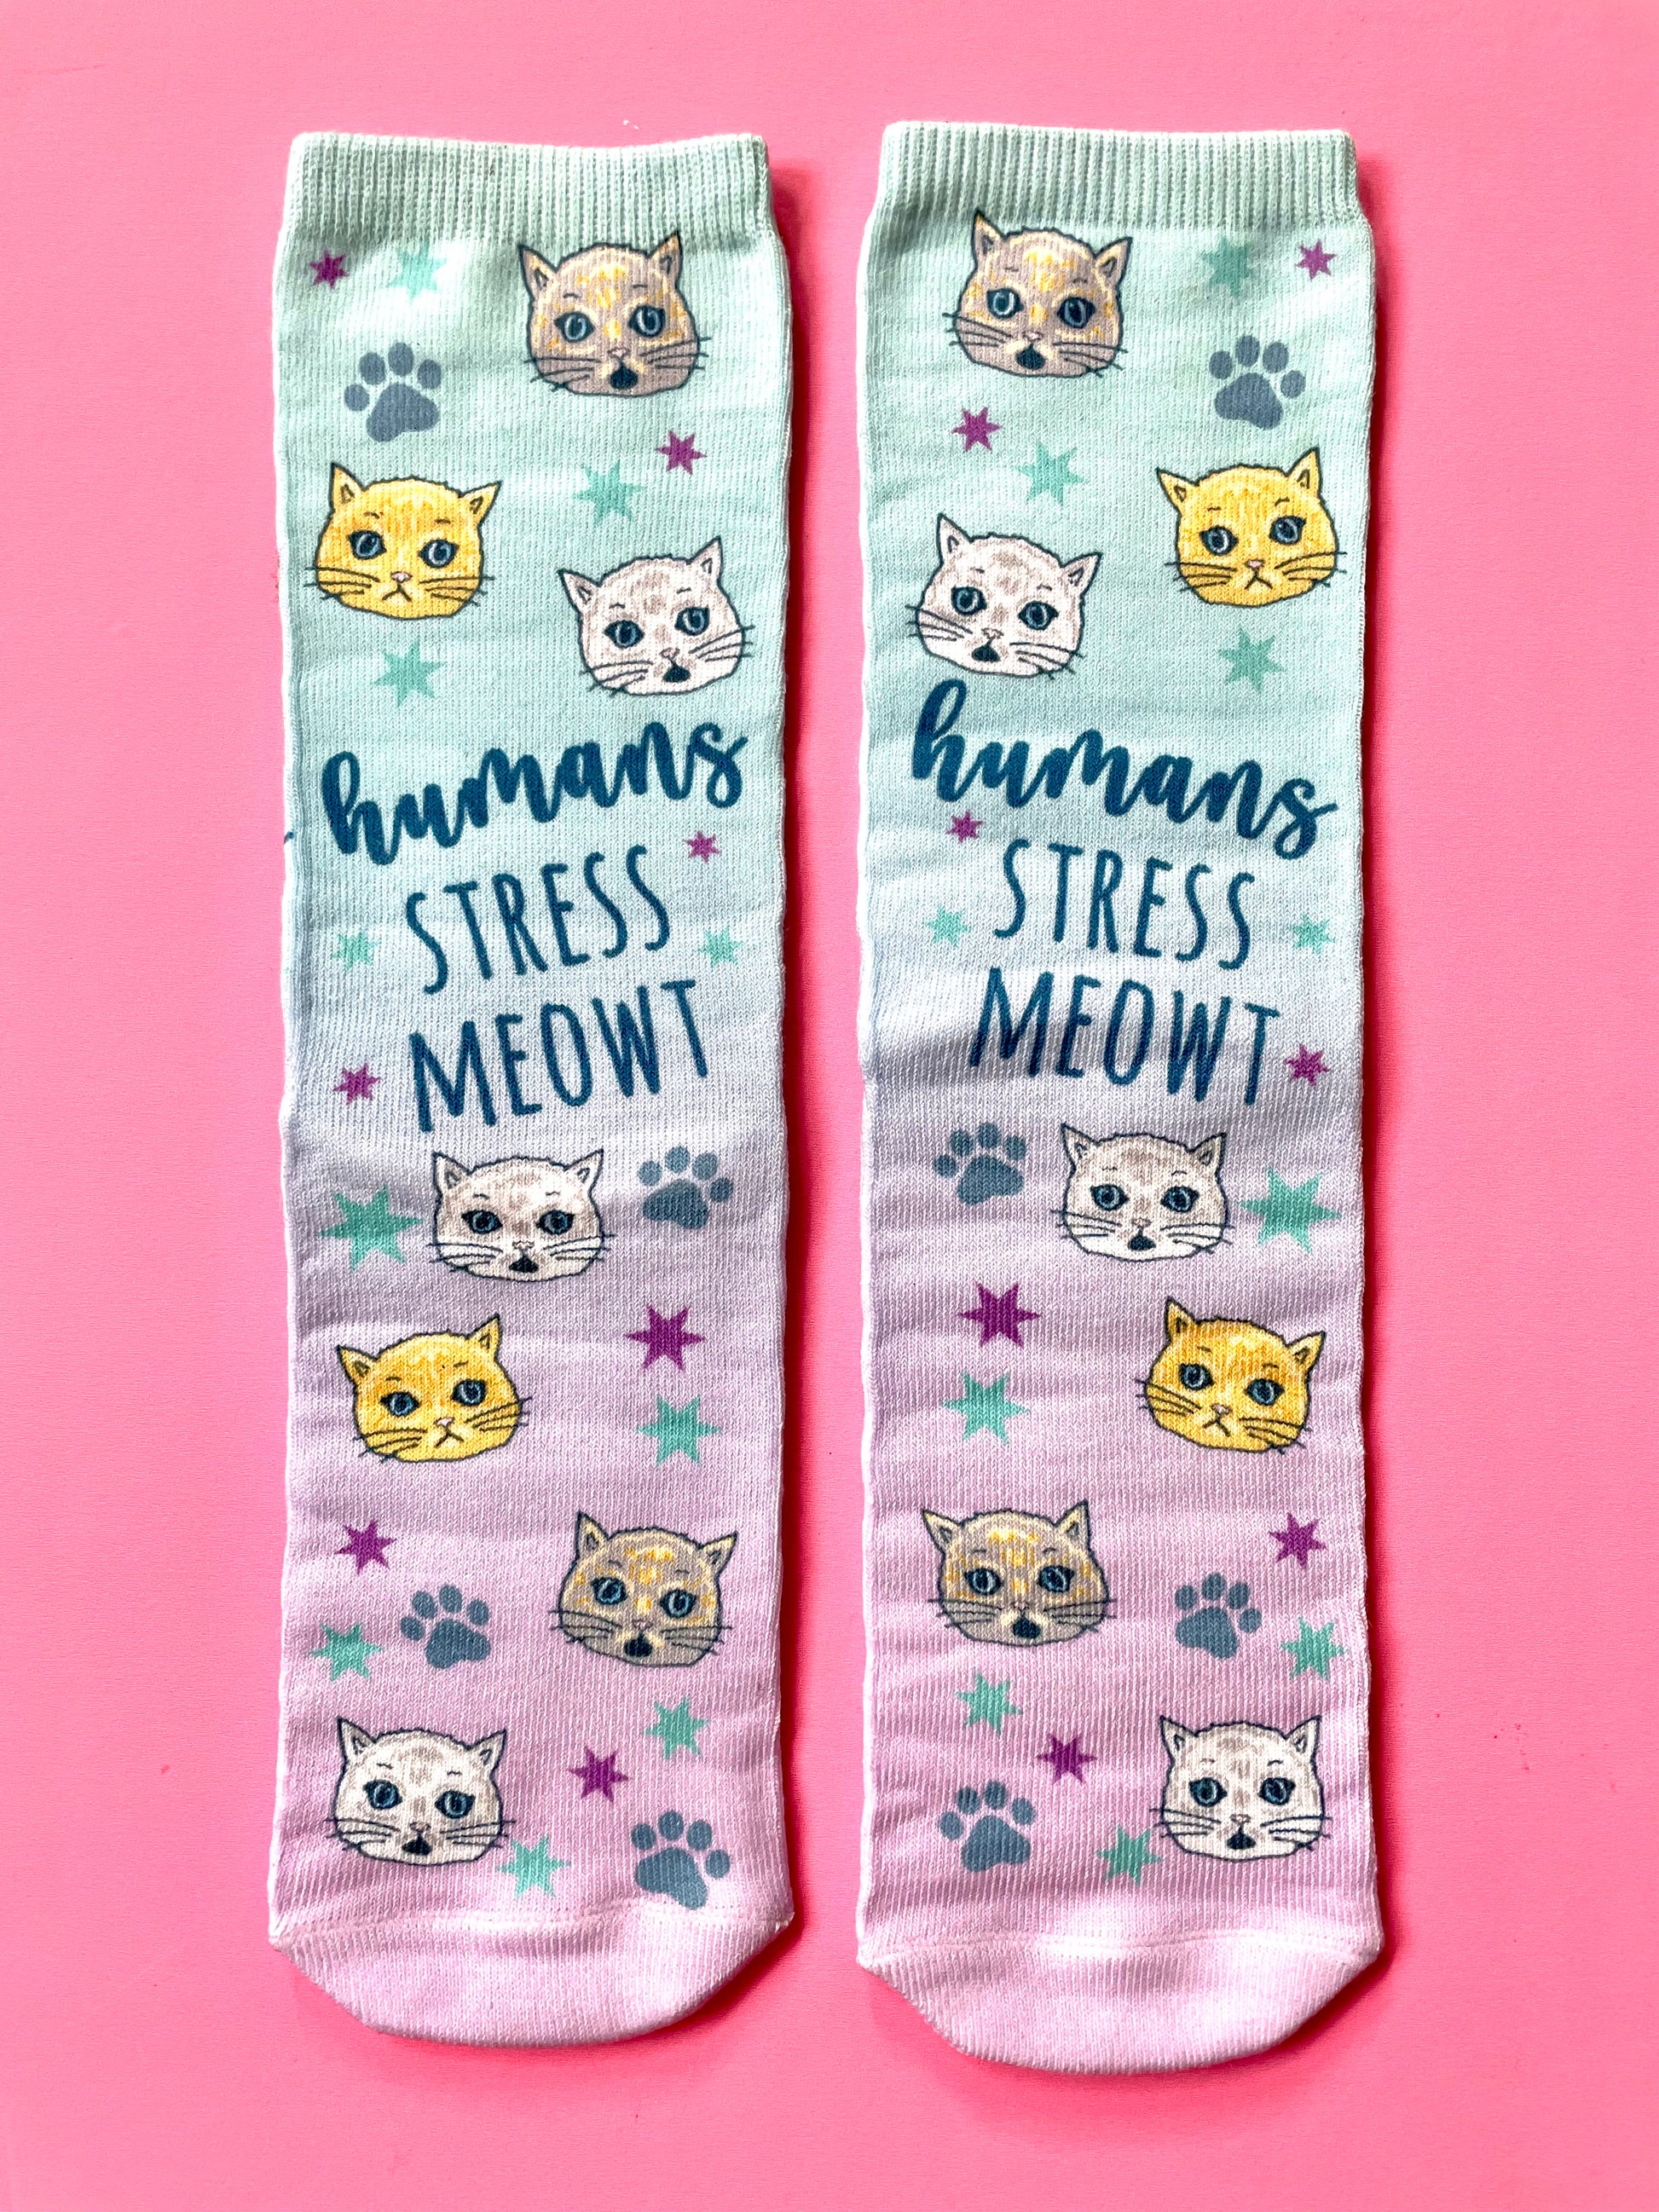 Humans Stress Meowt - Novelty Socks